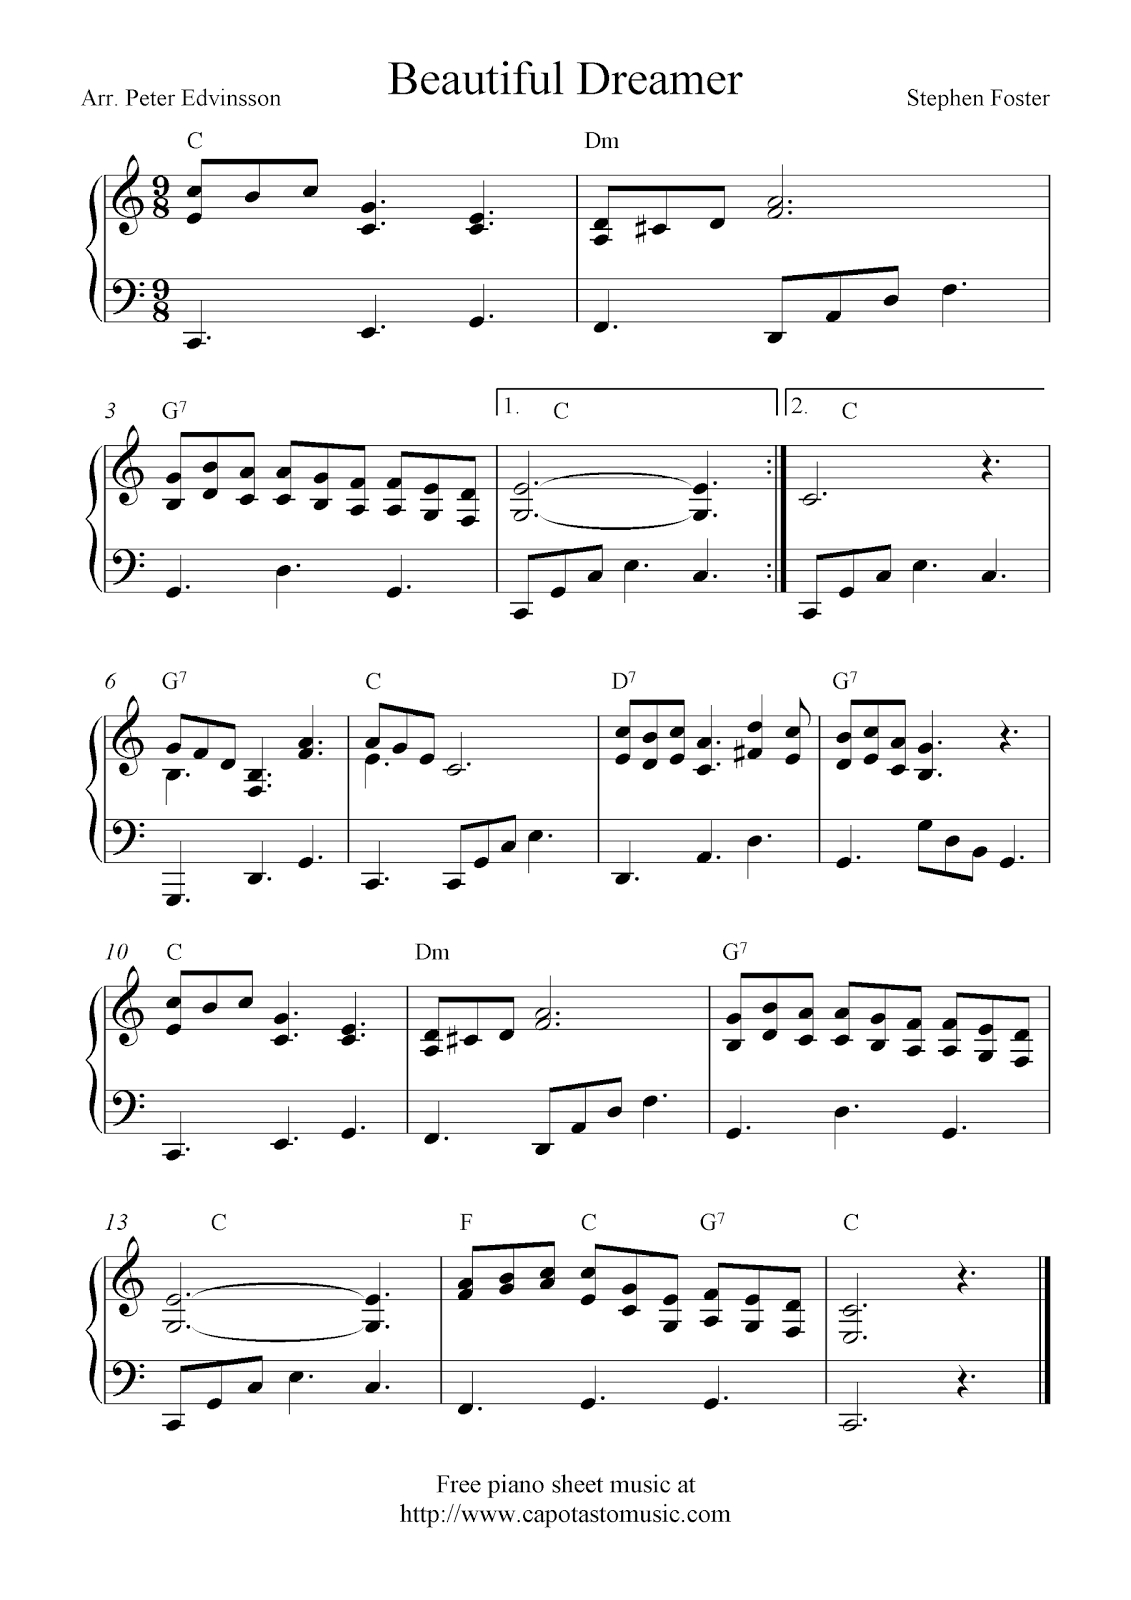 Free Easy Piano Sheet Music, Beautiful Dreamer - Free Printable Sheet Music For Piano